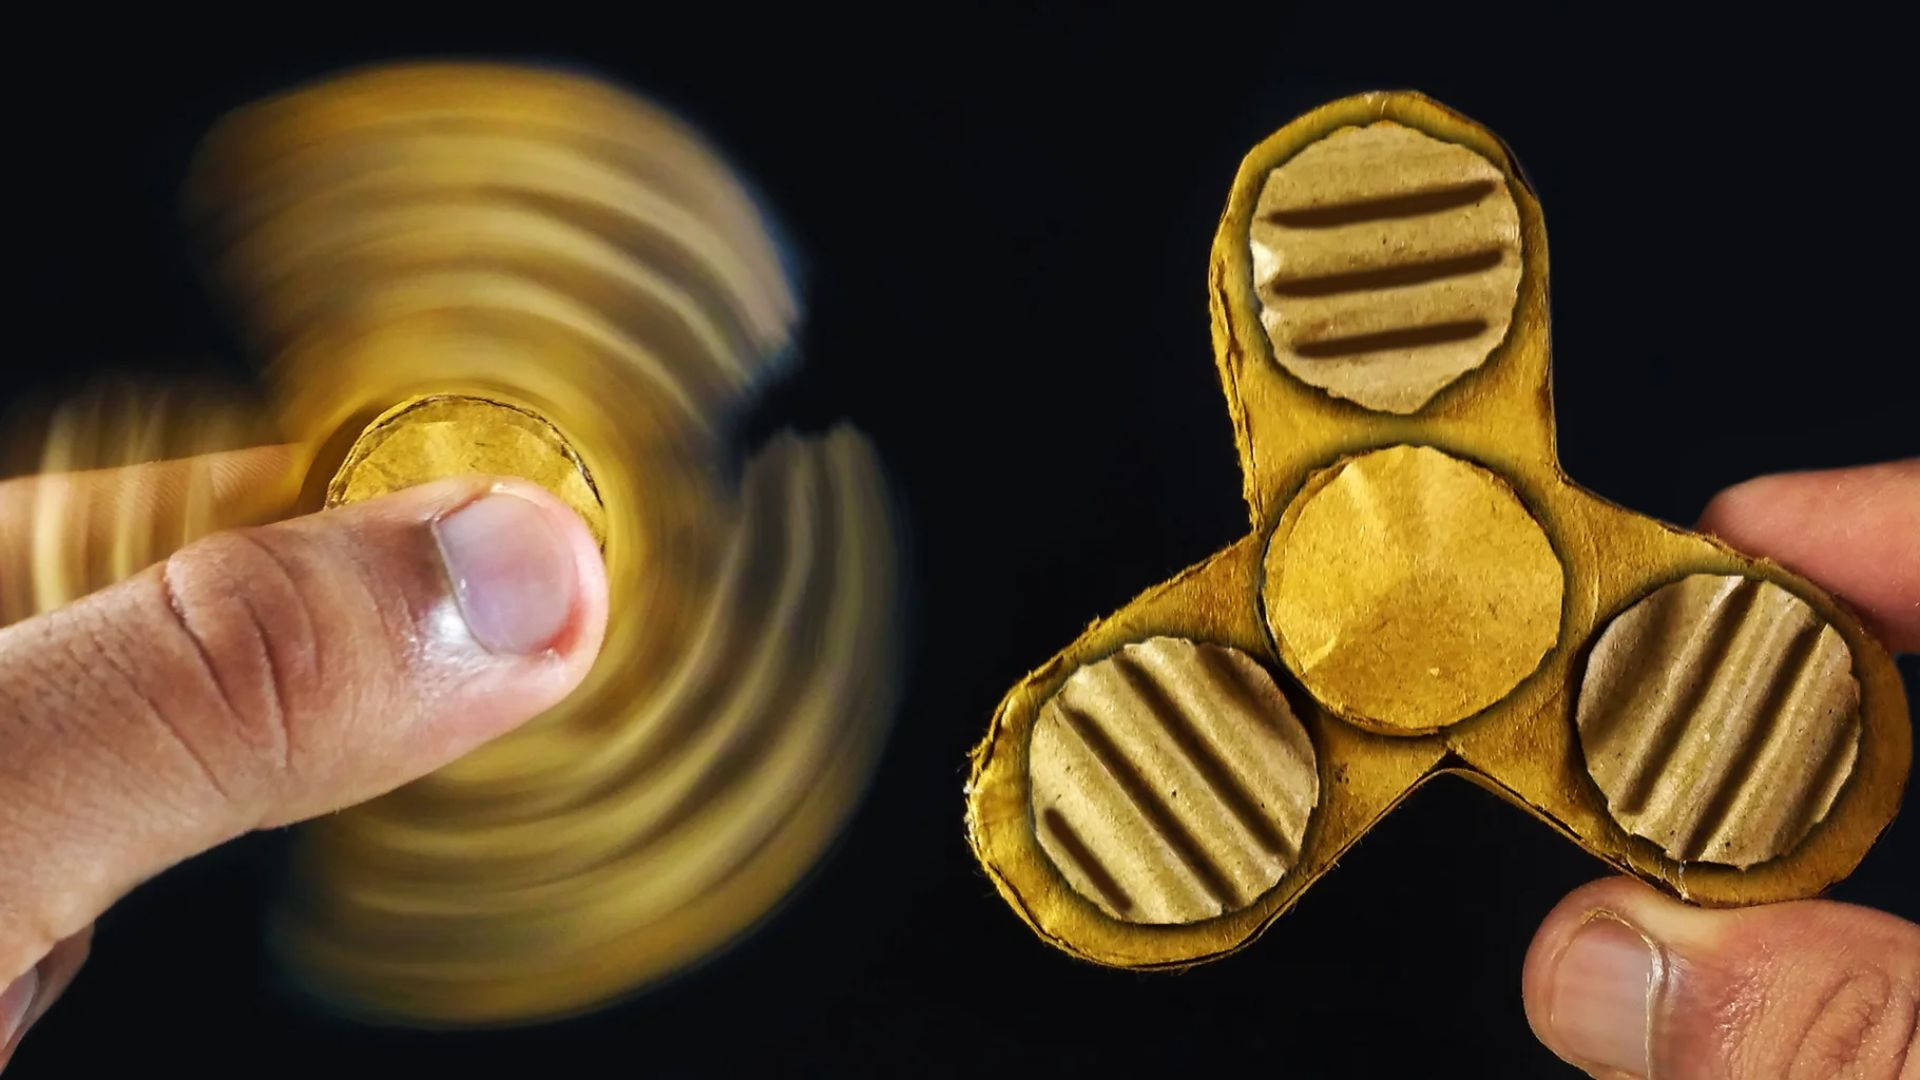 Exquisite Golden Fidget Spinner In Action Background